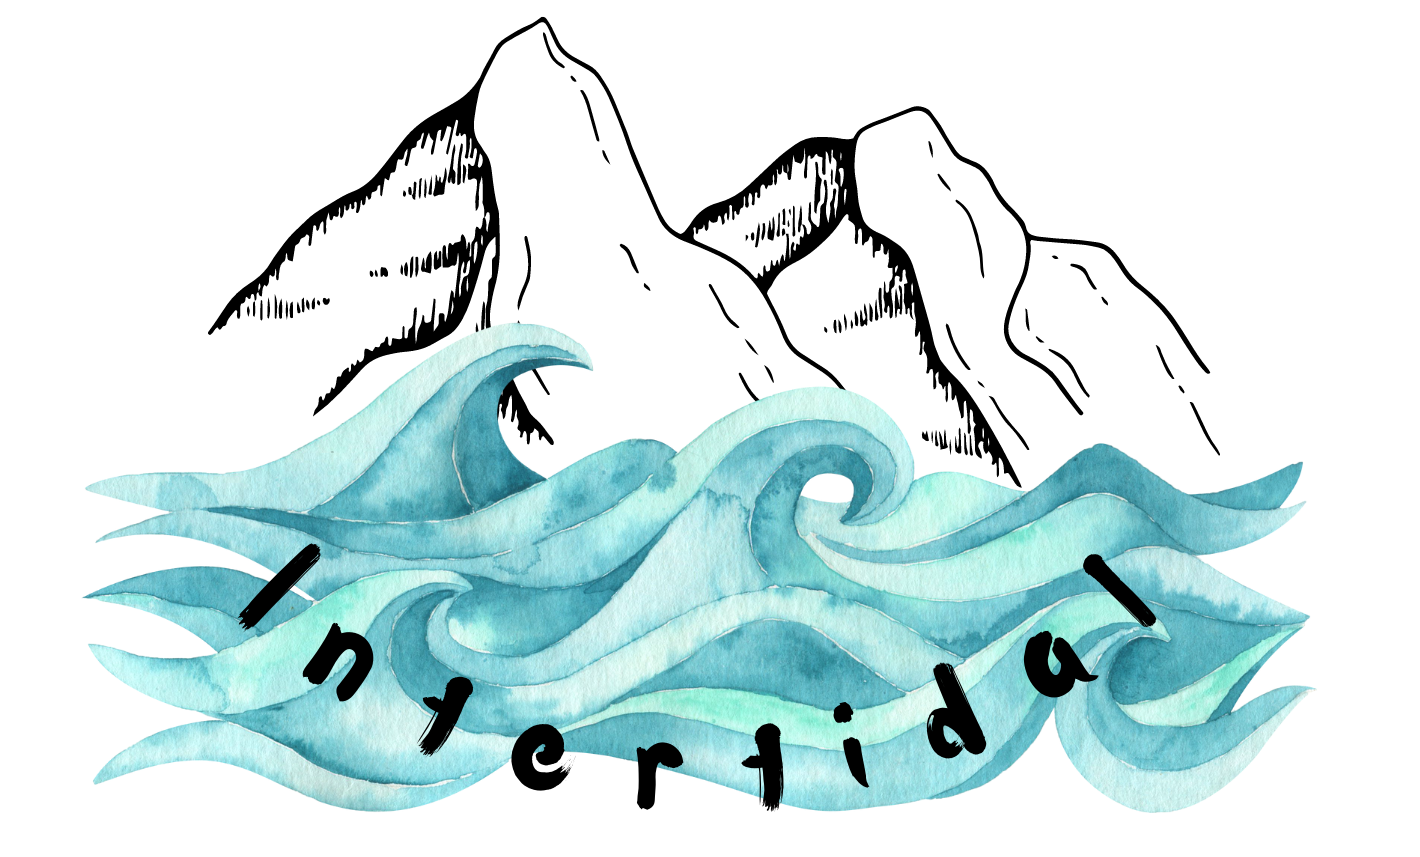 Intertidal